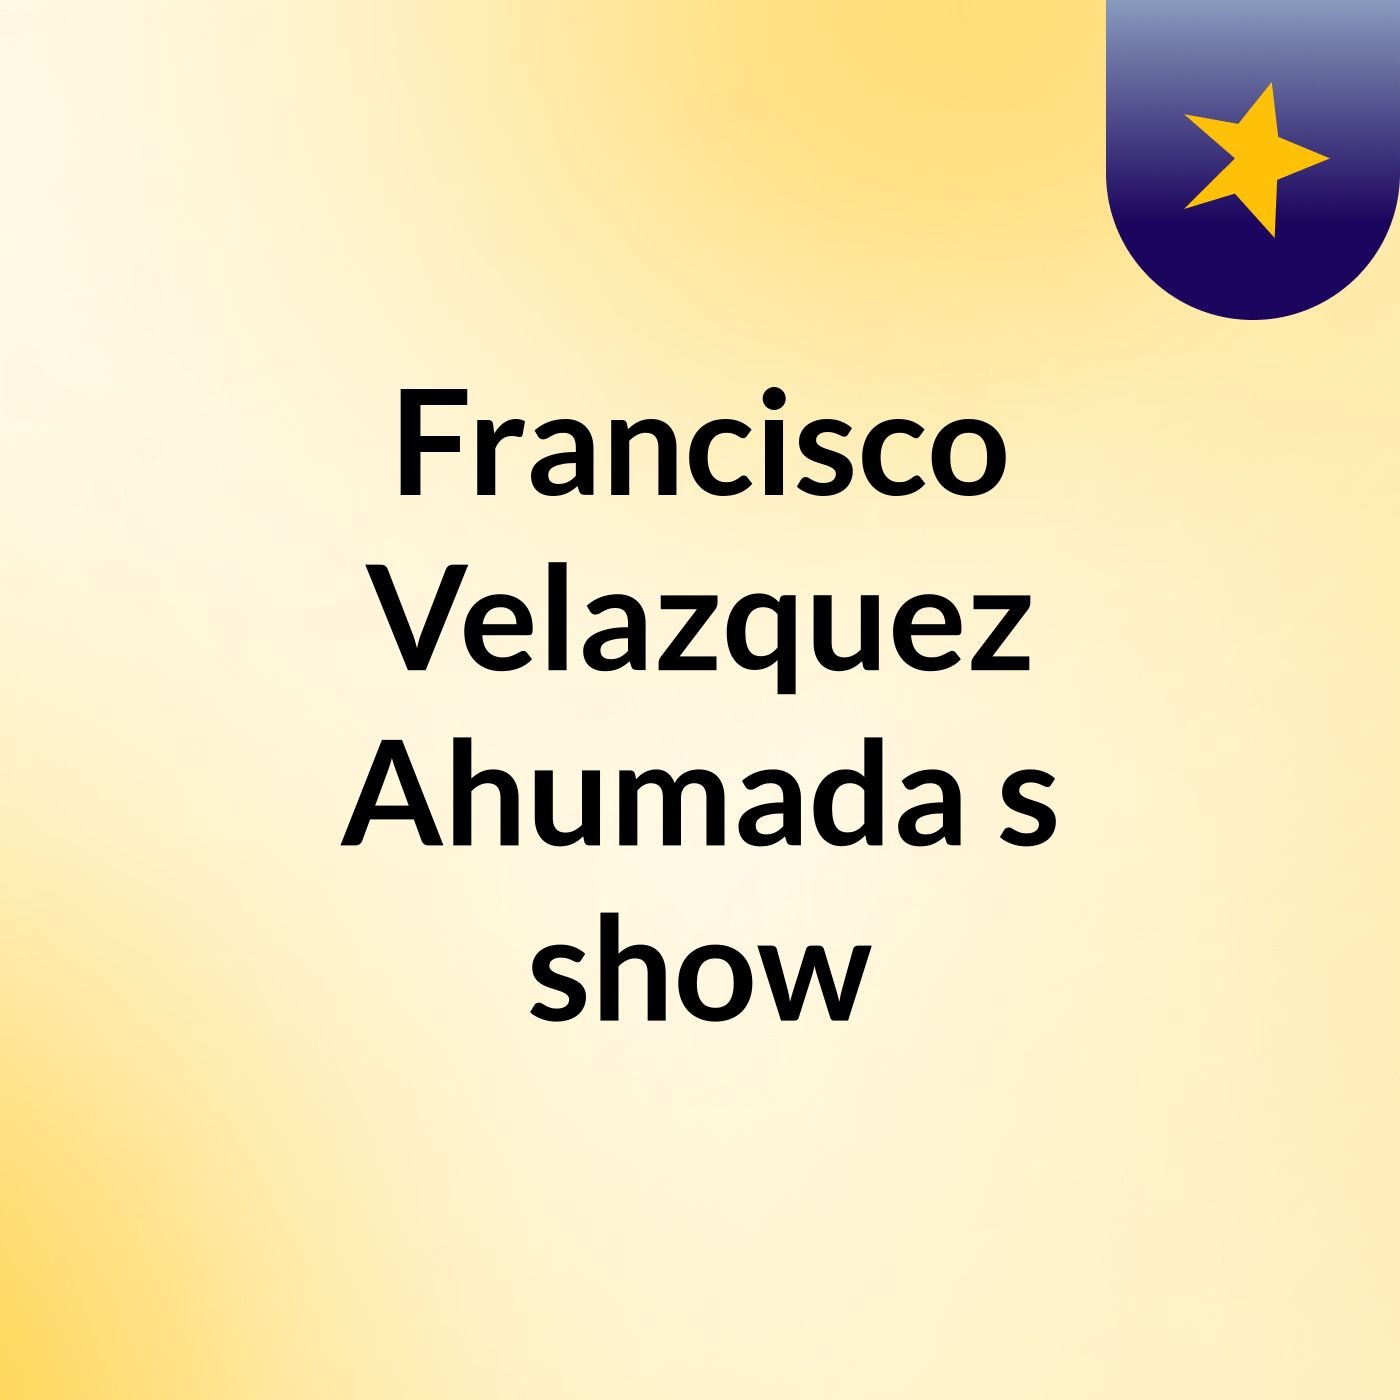 Francisco Velazquez Ahumada's show